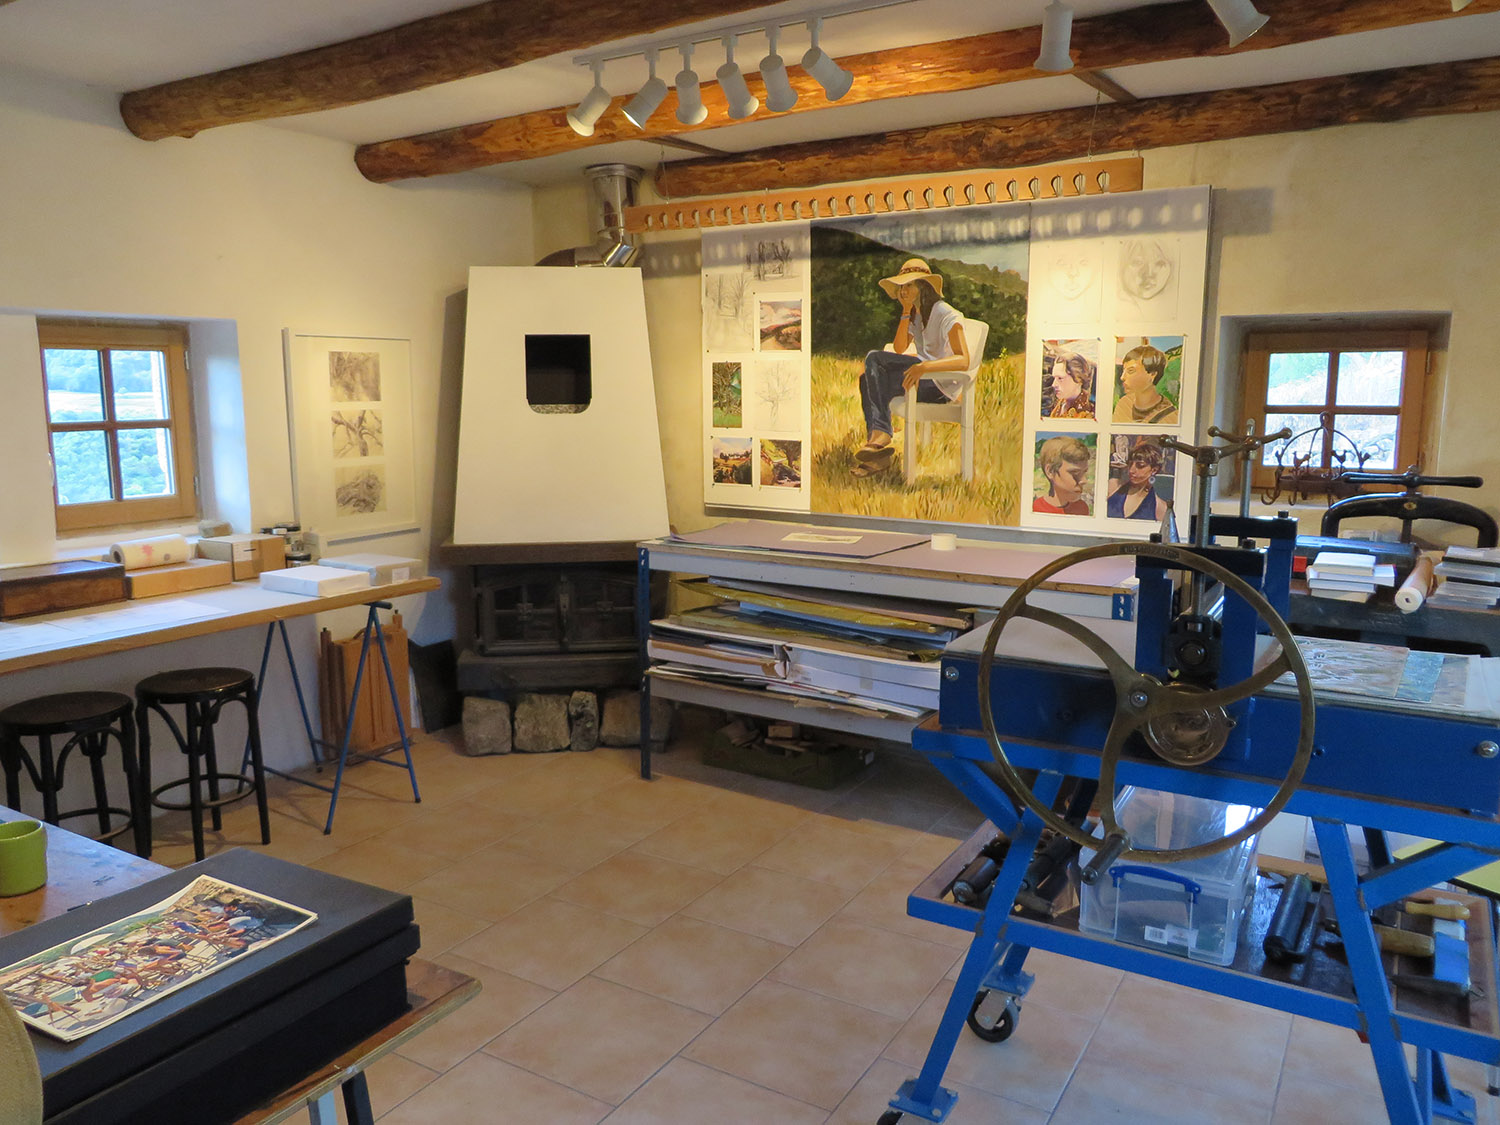  printmaking studio at les tapies summer art programs in europe 